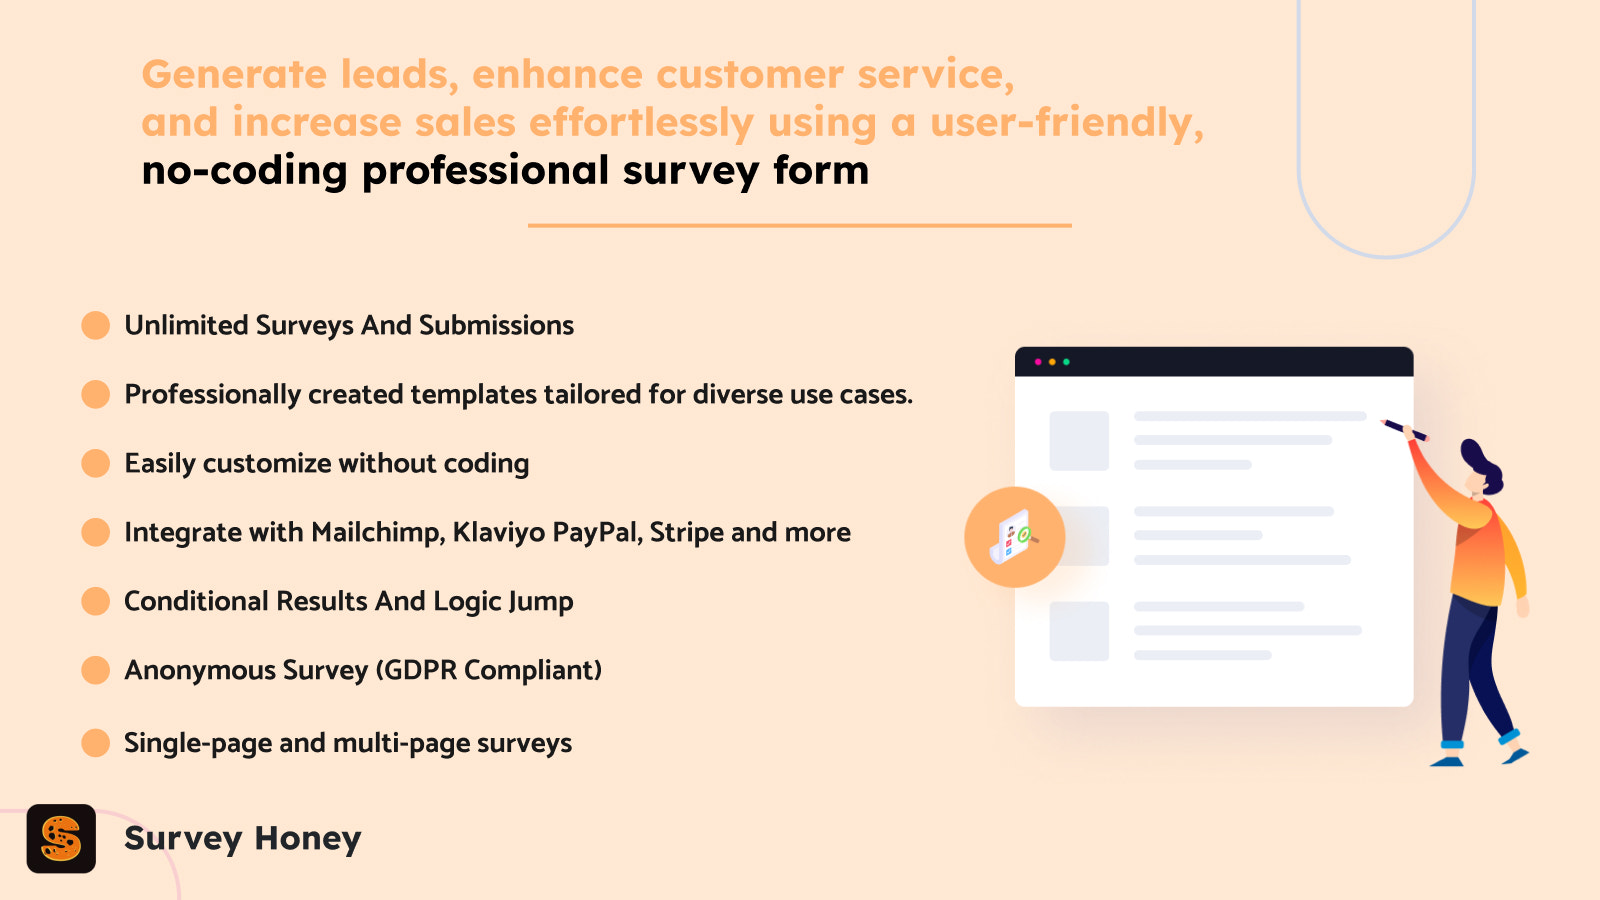 Shopify Survey Honey app no-coding professional survey form